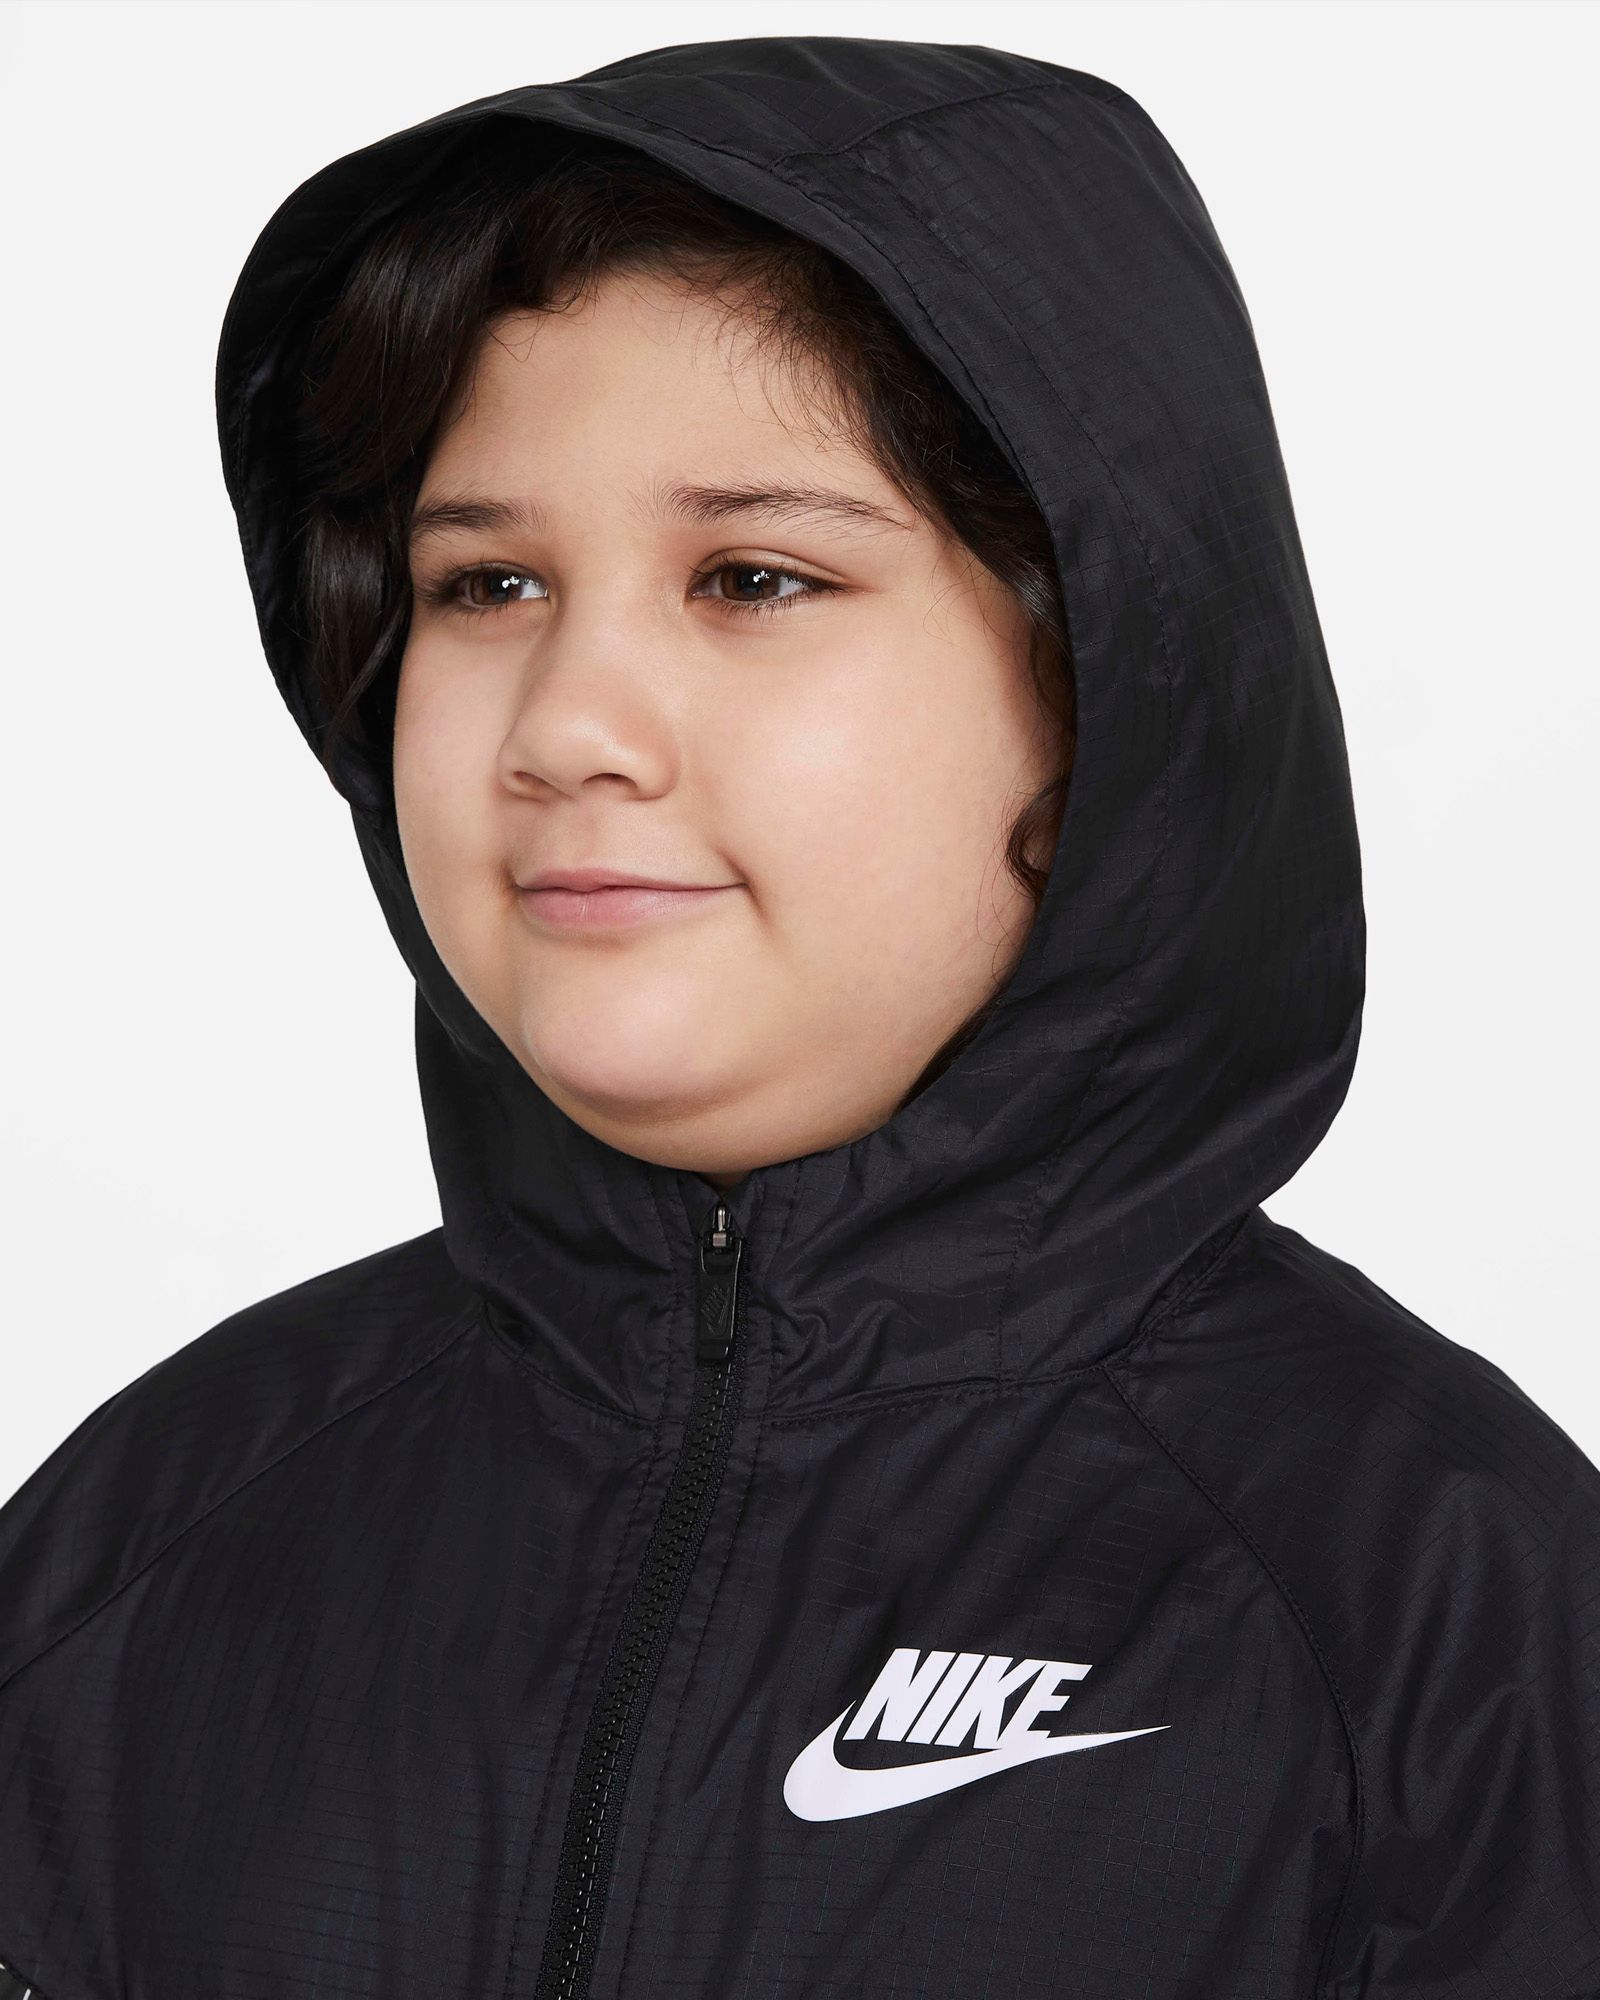  Nike Sporstwear Windrunner Kid Jacket - Black/Barely Volt 